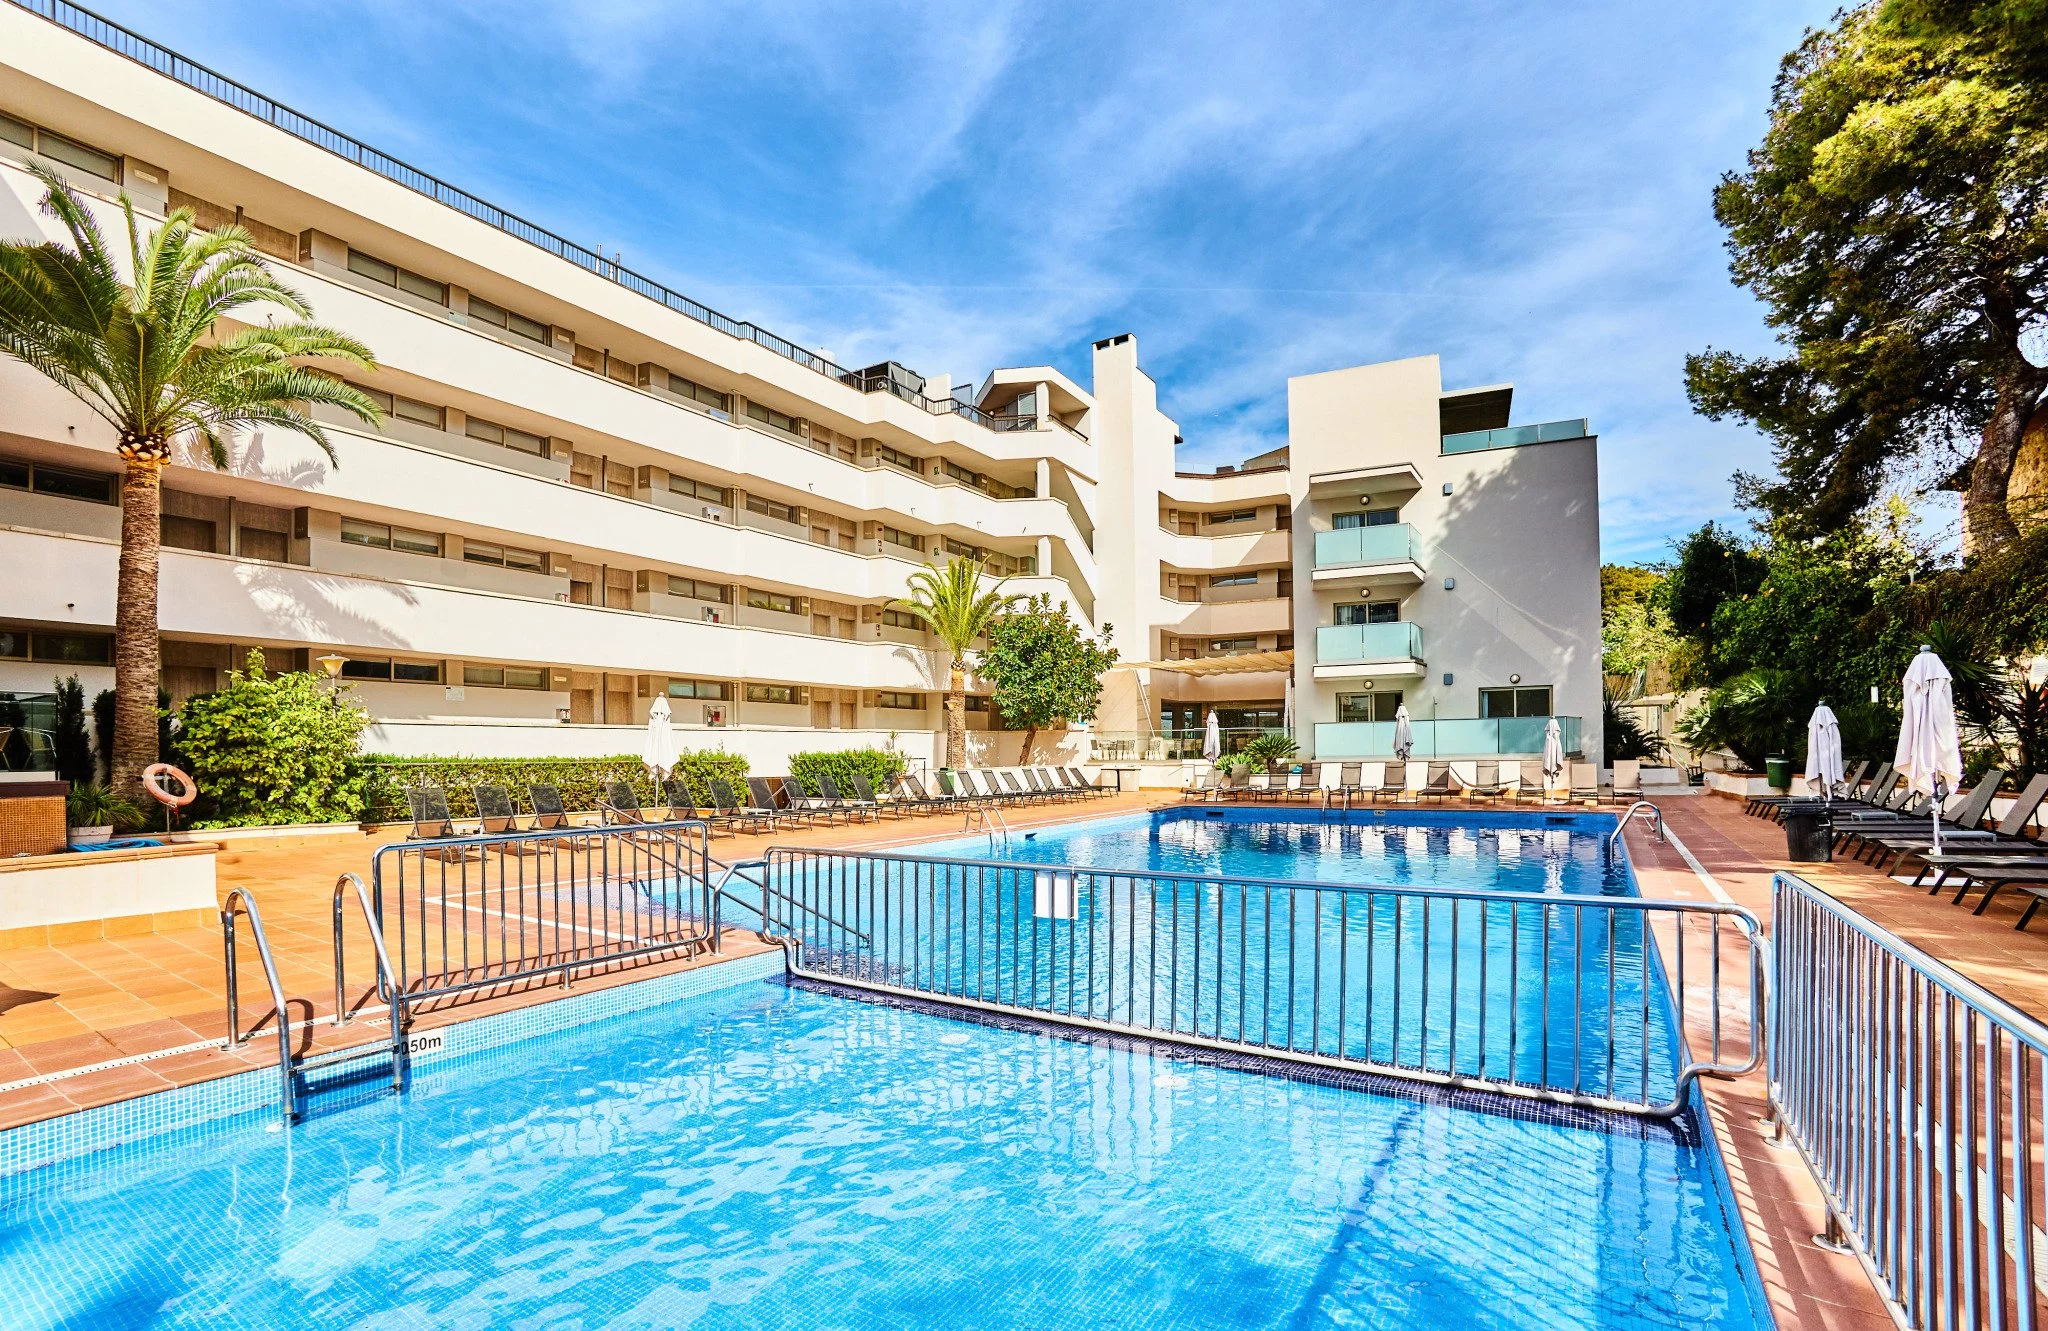 Leonardo Suites Hotel Mallorca Calvia - Pool